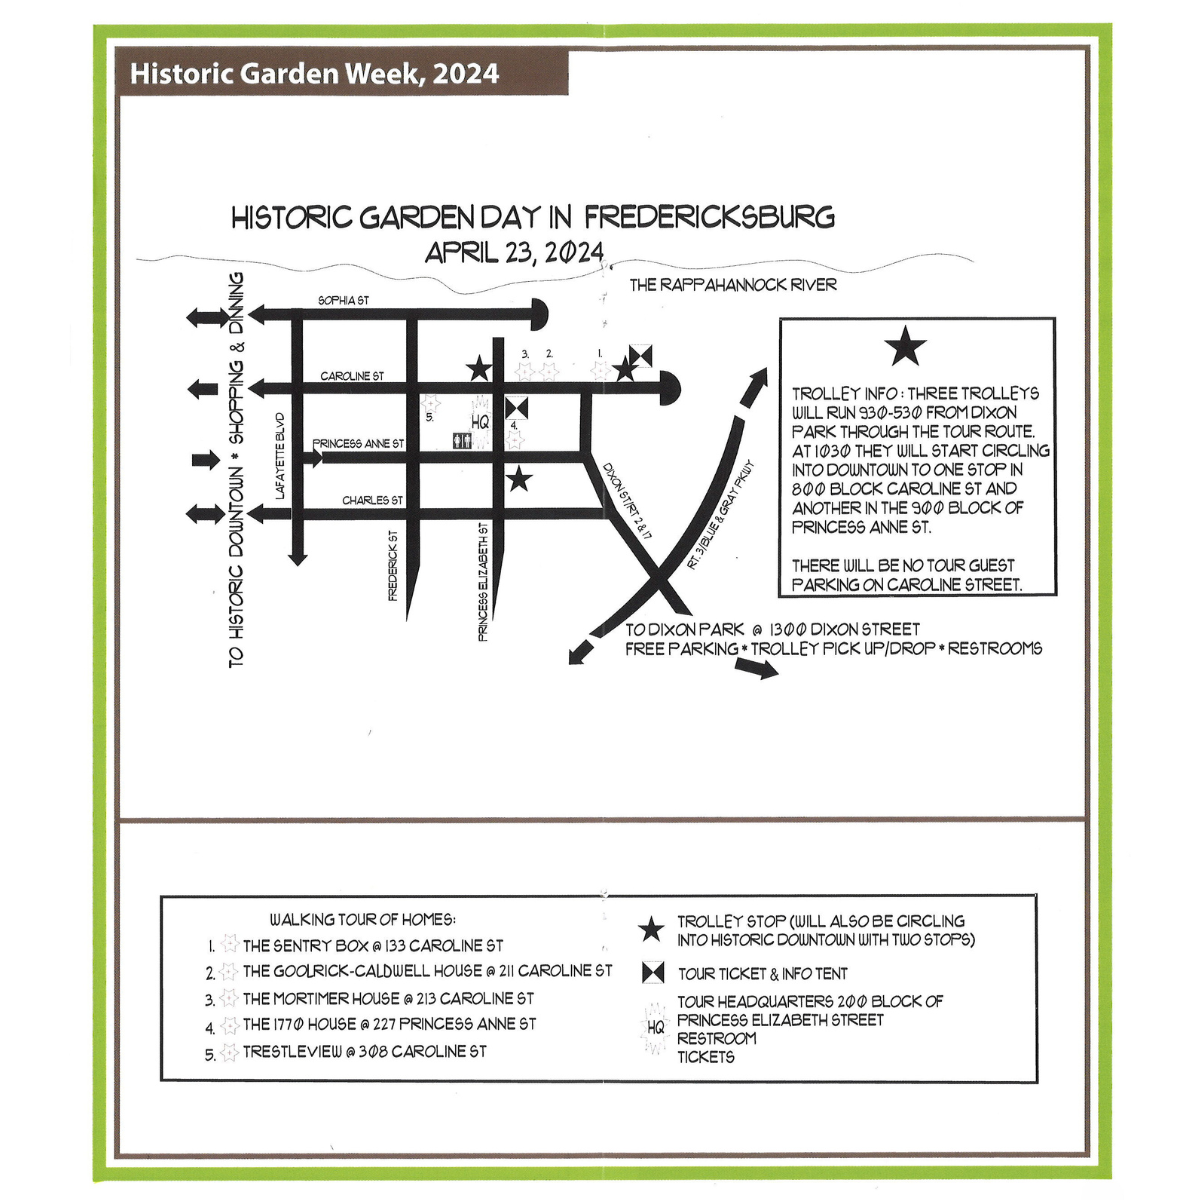 Fredericksburg historic garden week map 2022